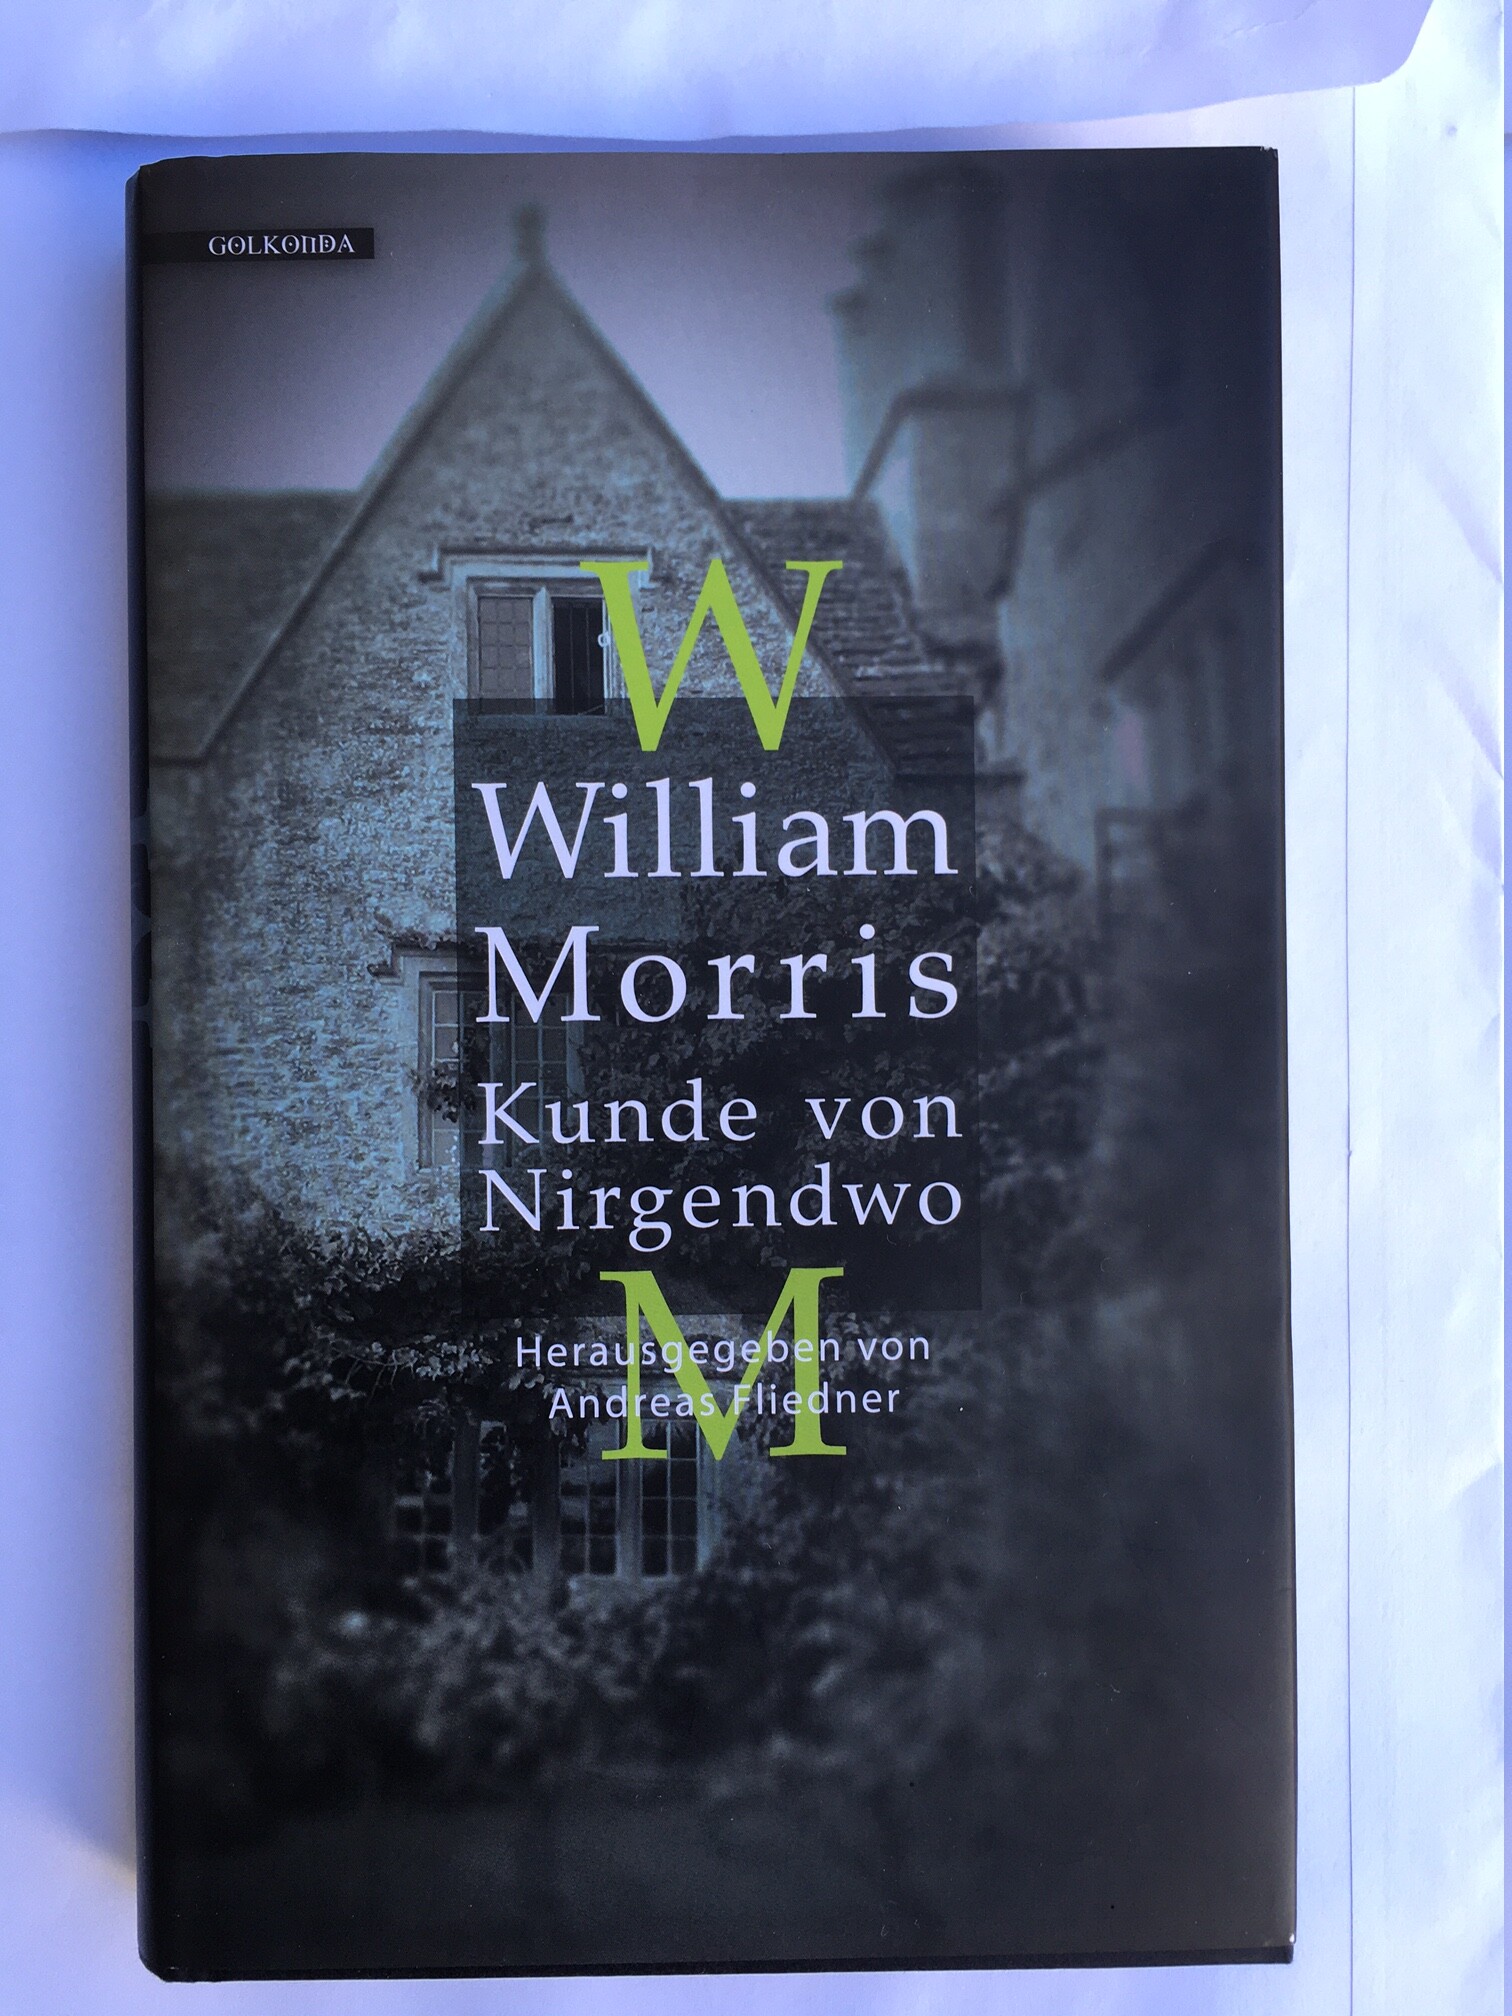 William Morris, Kunde von Nirgendwo (Golkonda Verlag CC BY-NC-SA)